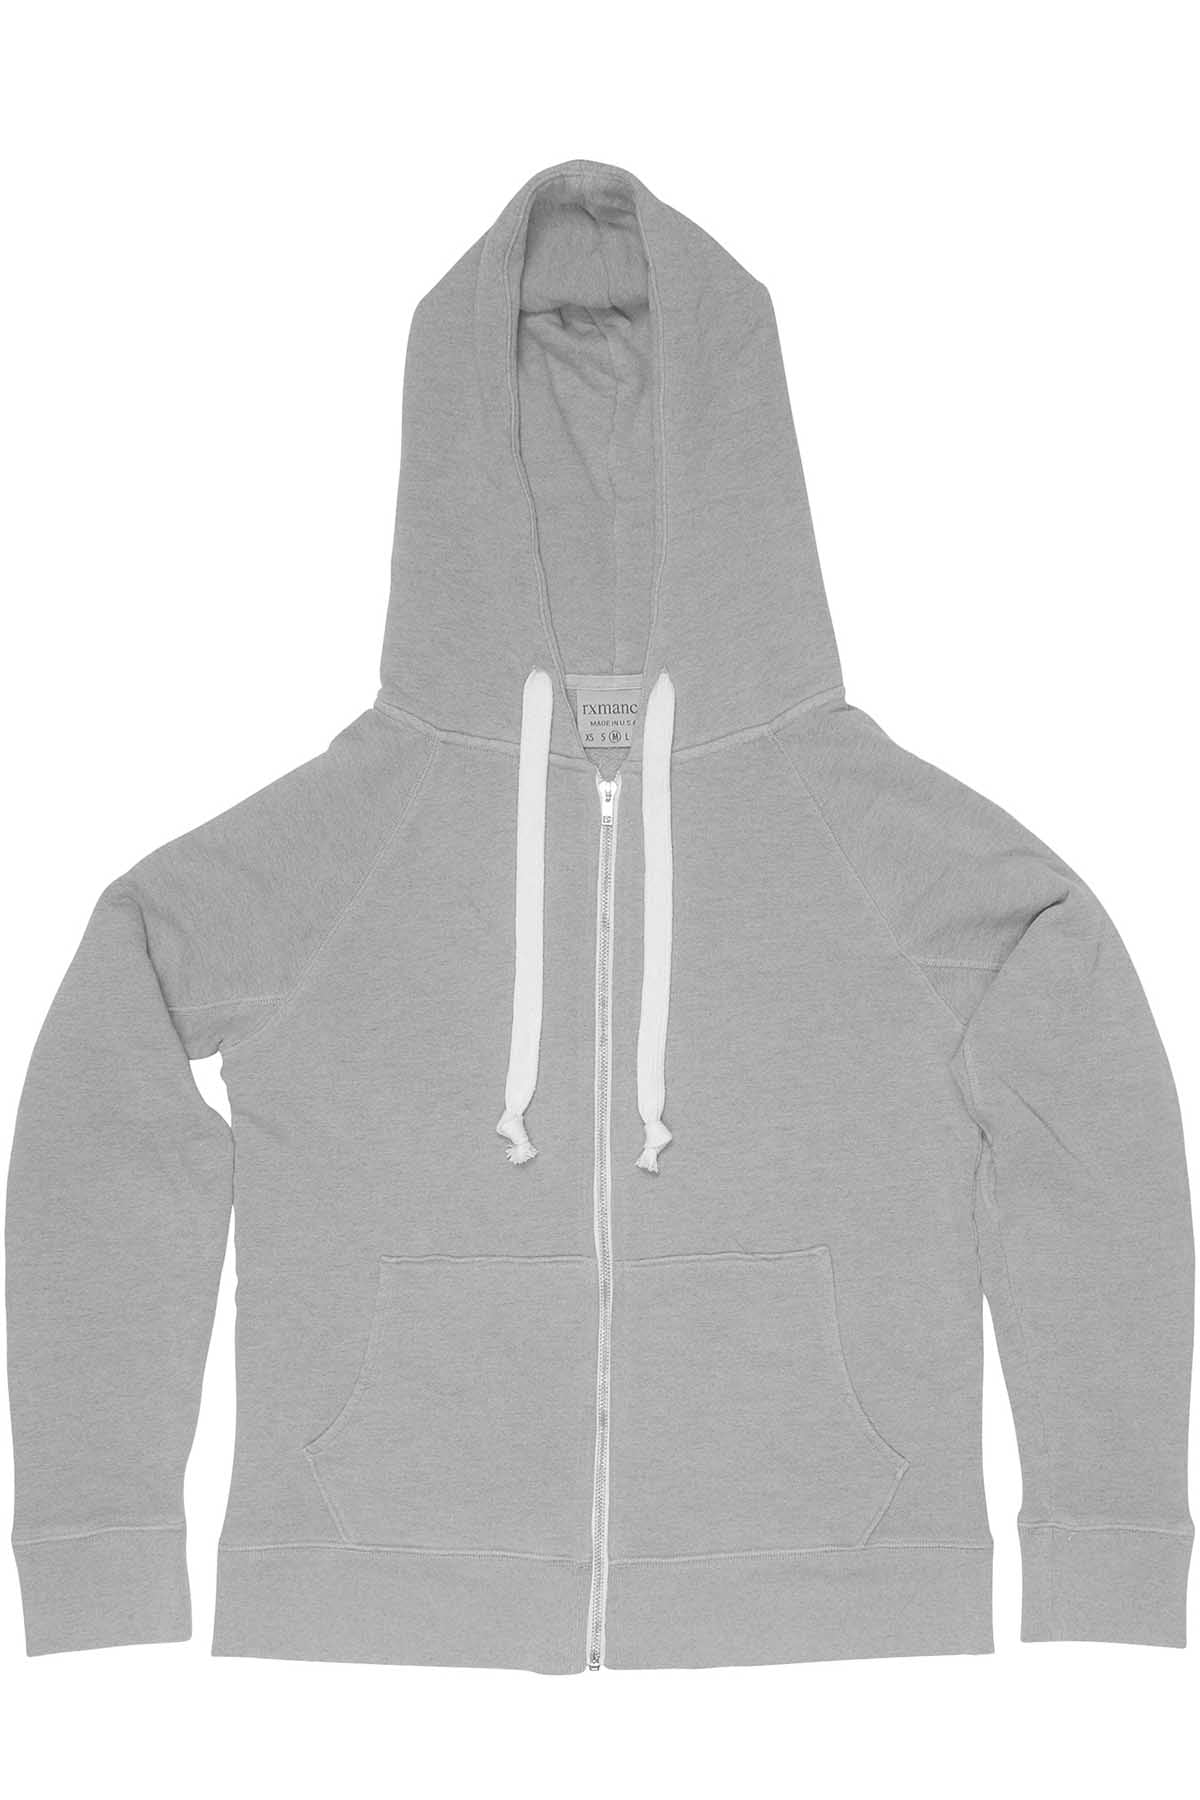 Rxmance Unisex Dawn Grey Hooded Zip Sweatshirt